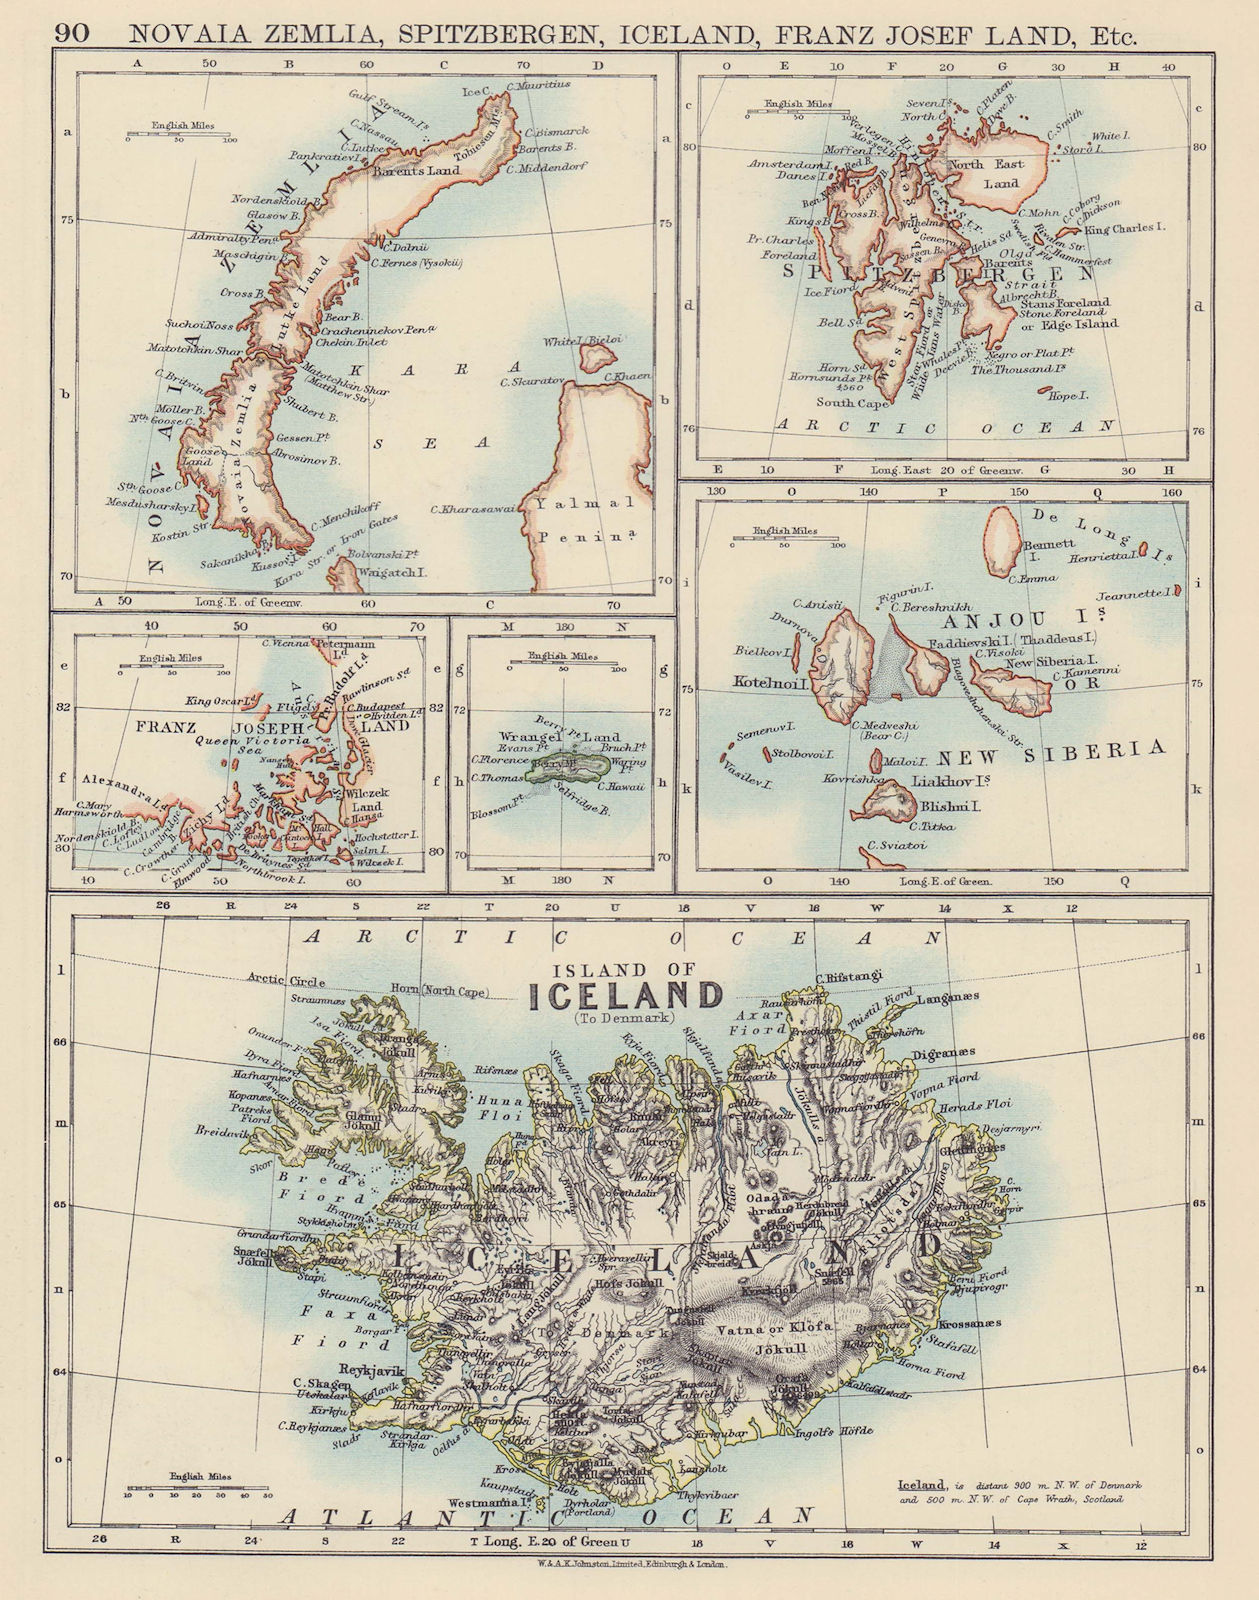 ARCTIC ISLANDS Novaia Zemlia Spitsbergen Iceland Franz Josef Land Anjou 1901 map